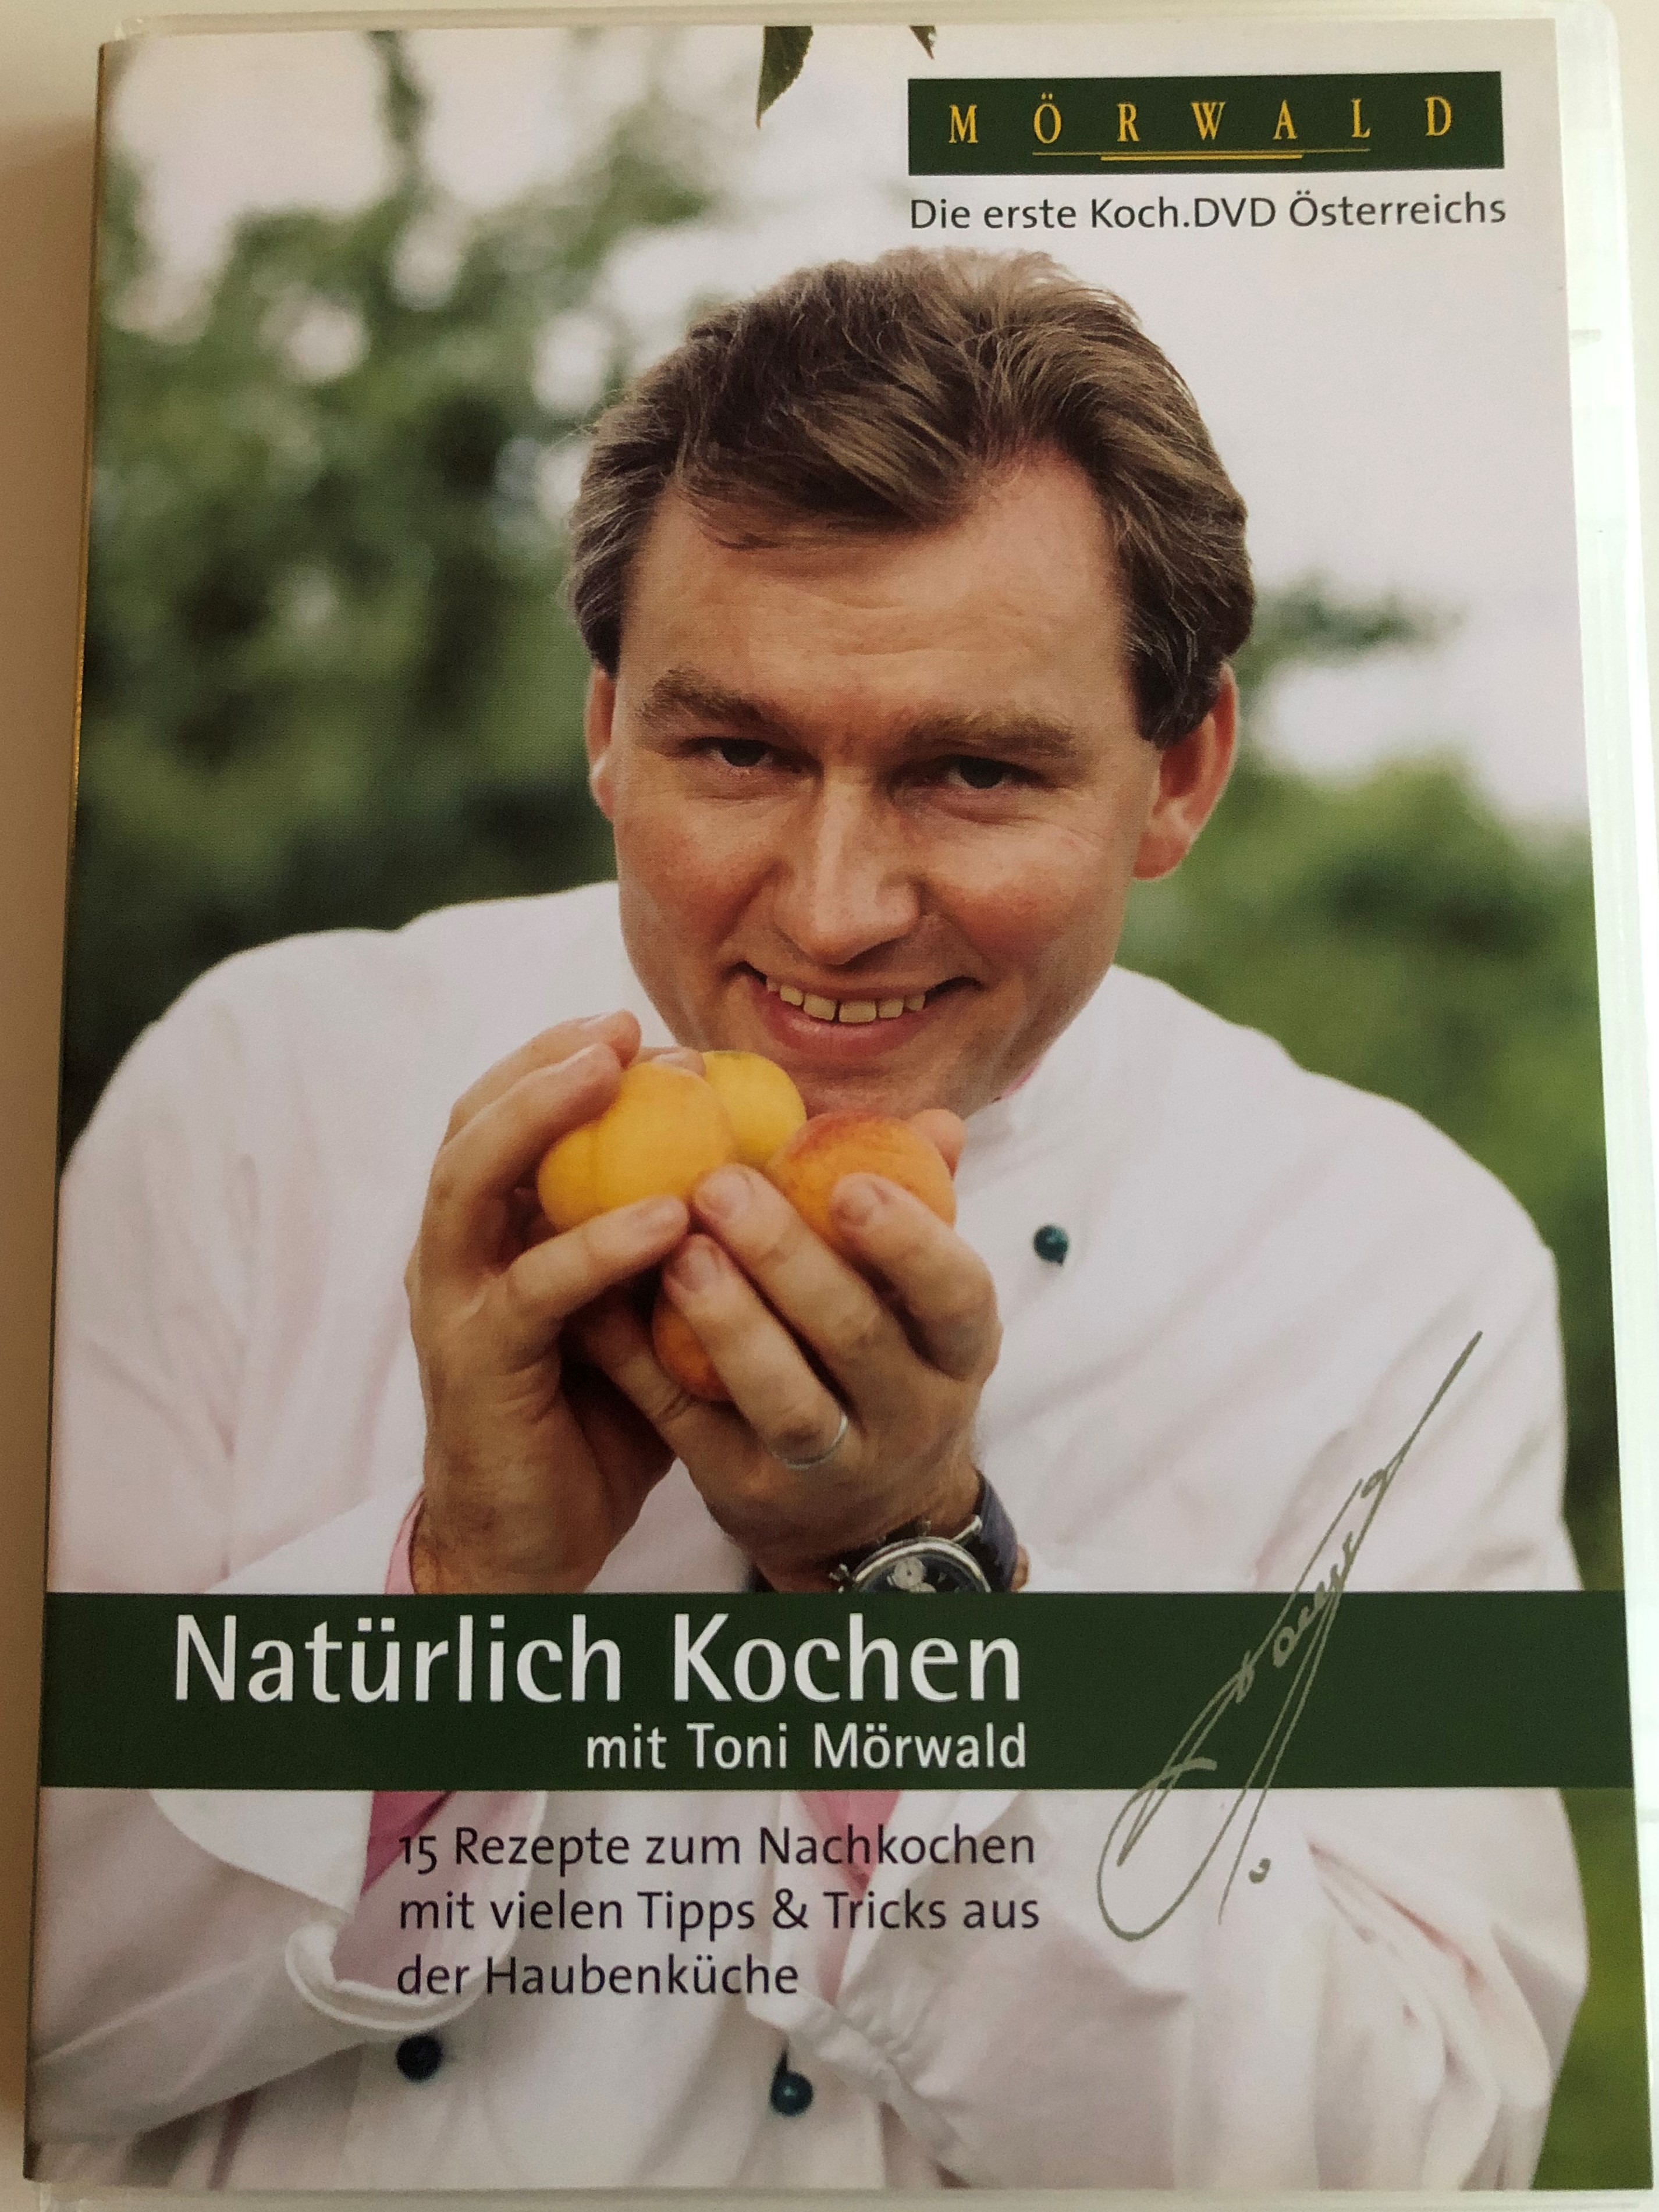 nat-rlich-kochen-dvd-2005-mit-toni-m-rwald-cooking-with-toni-m-rwald-1.jpg